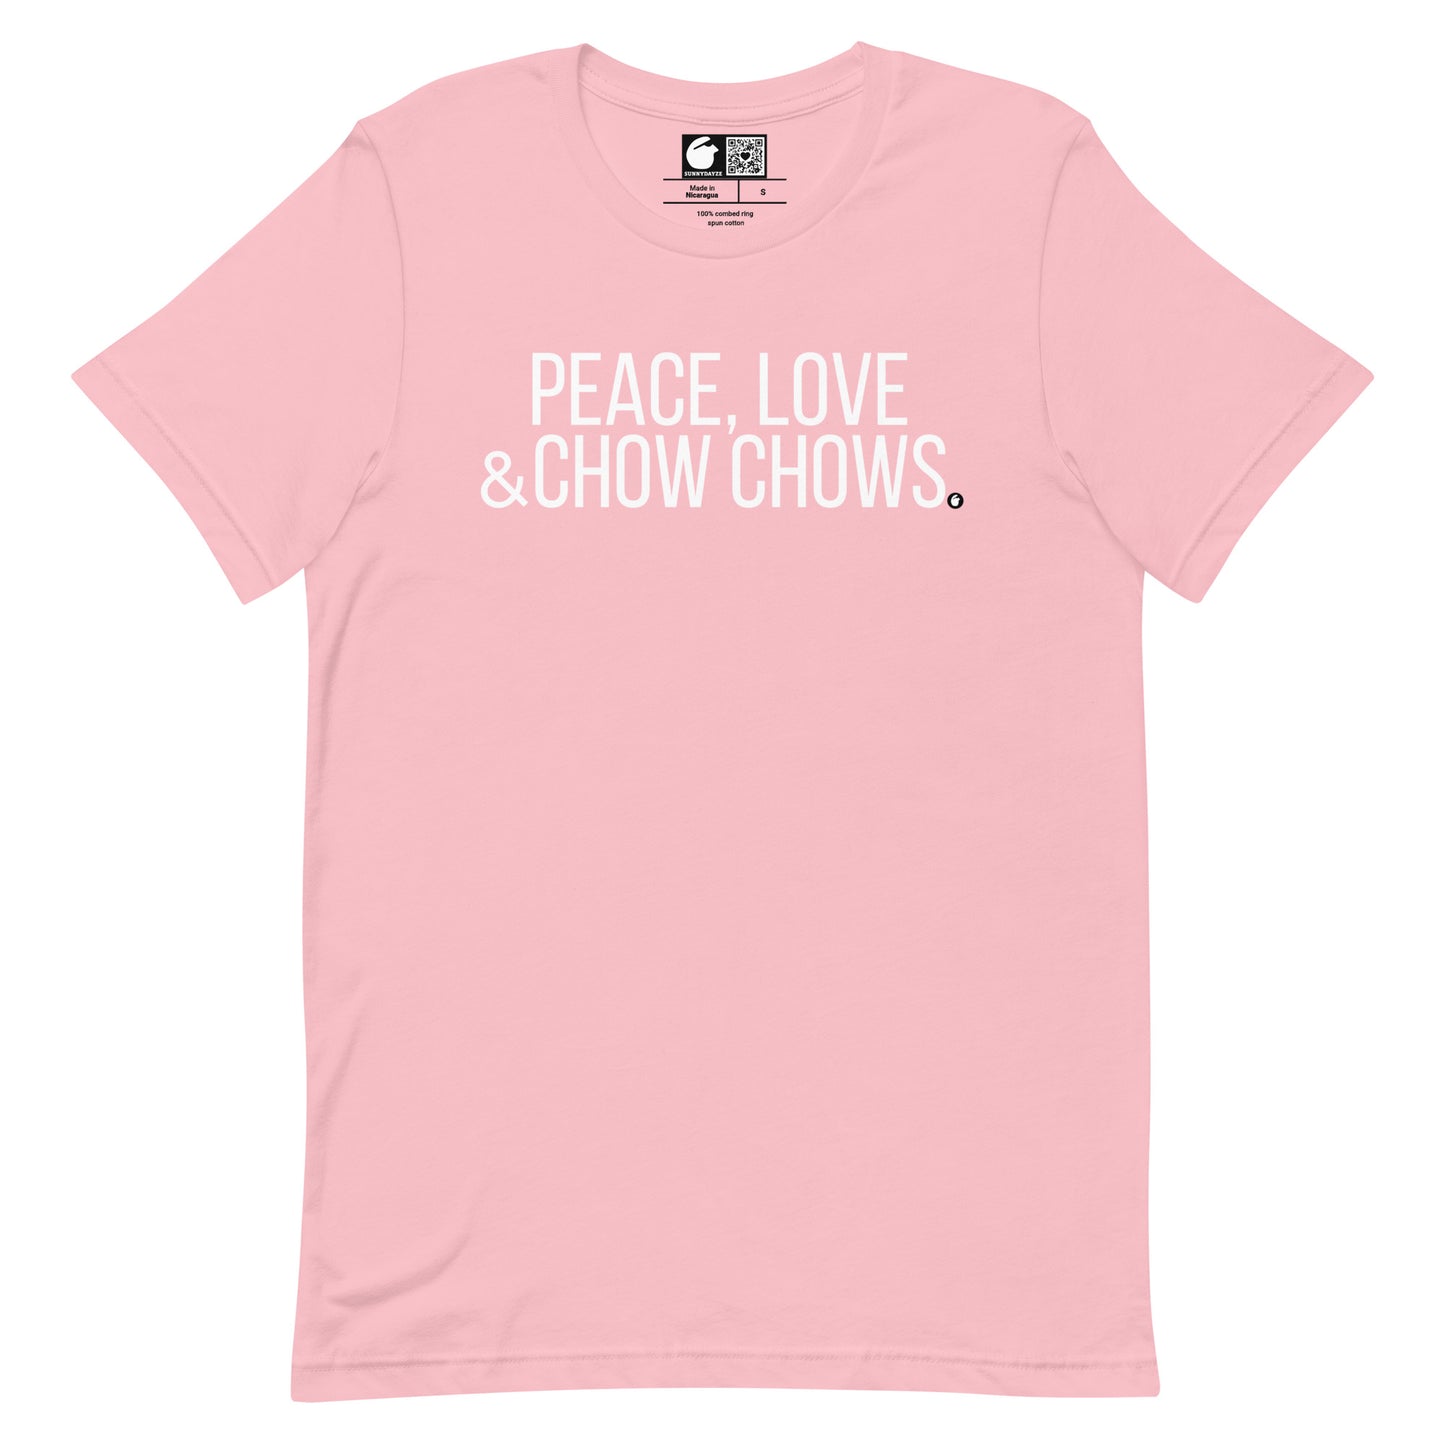 CHOW CHOWS Short-Sleeve Unisex t-shirt